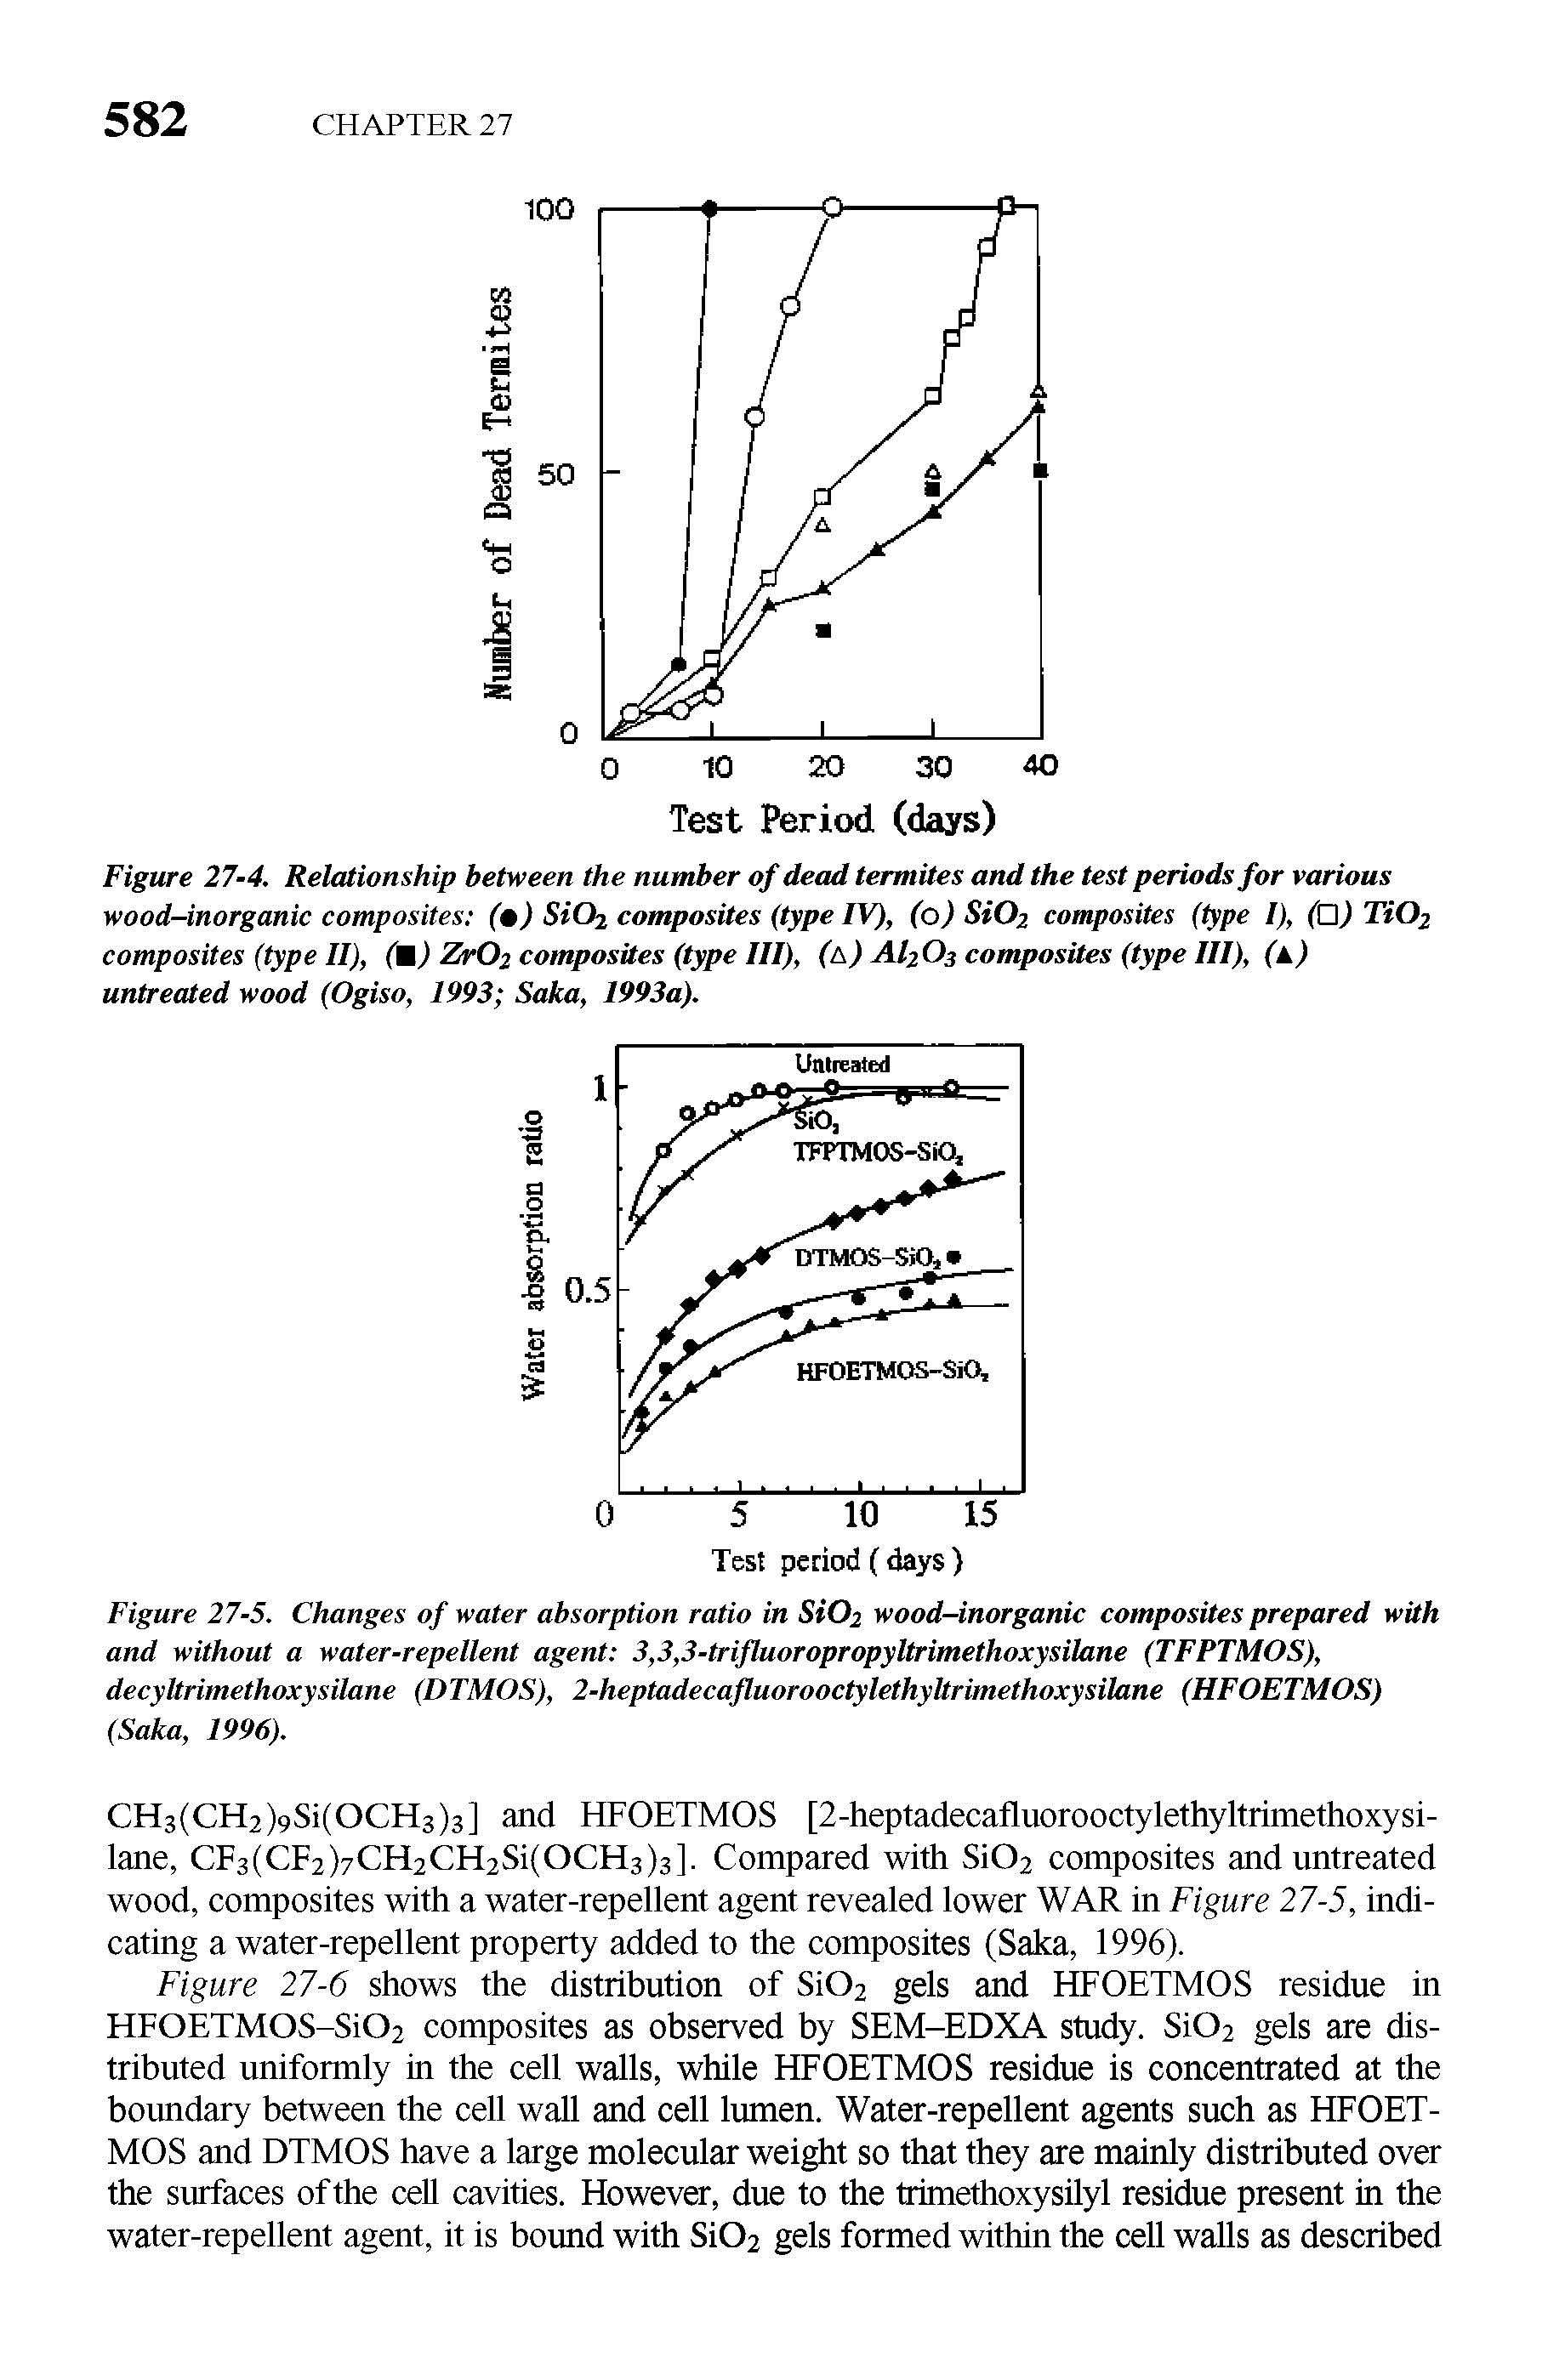 Figure 27-5. Changes of water absorption ratio in Si02 wood-inorganic composites prepared with and without a water-repellent agent 3,3,3-trifluoropropyltrimethoxysilane (TFPTMOS), decyltrimethoxysUane (DTMOS), 2-heptadecafluorooctylethyltrimethoxysilane (HFOETMOS) (Saka, 1996).